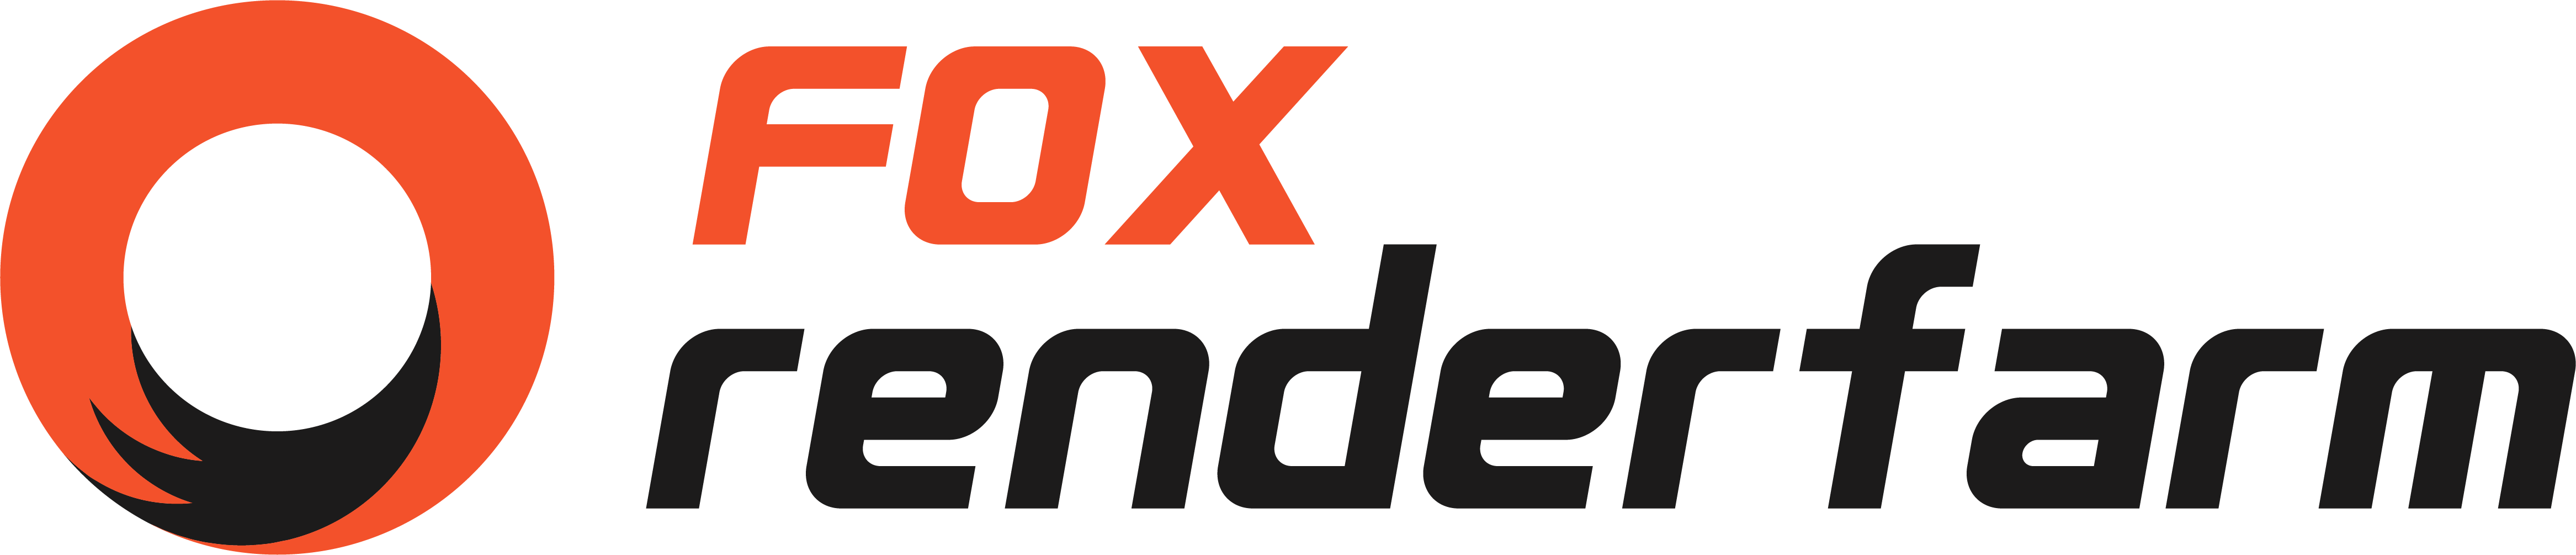 online fox india renderfarm logo